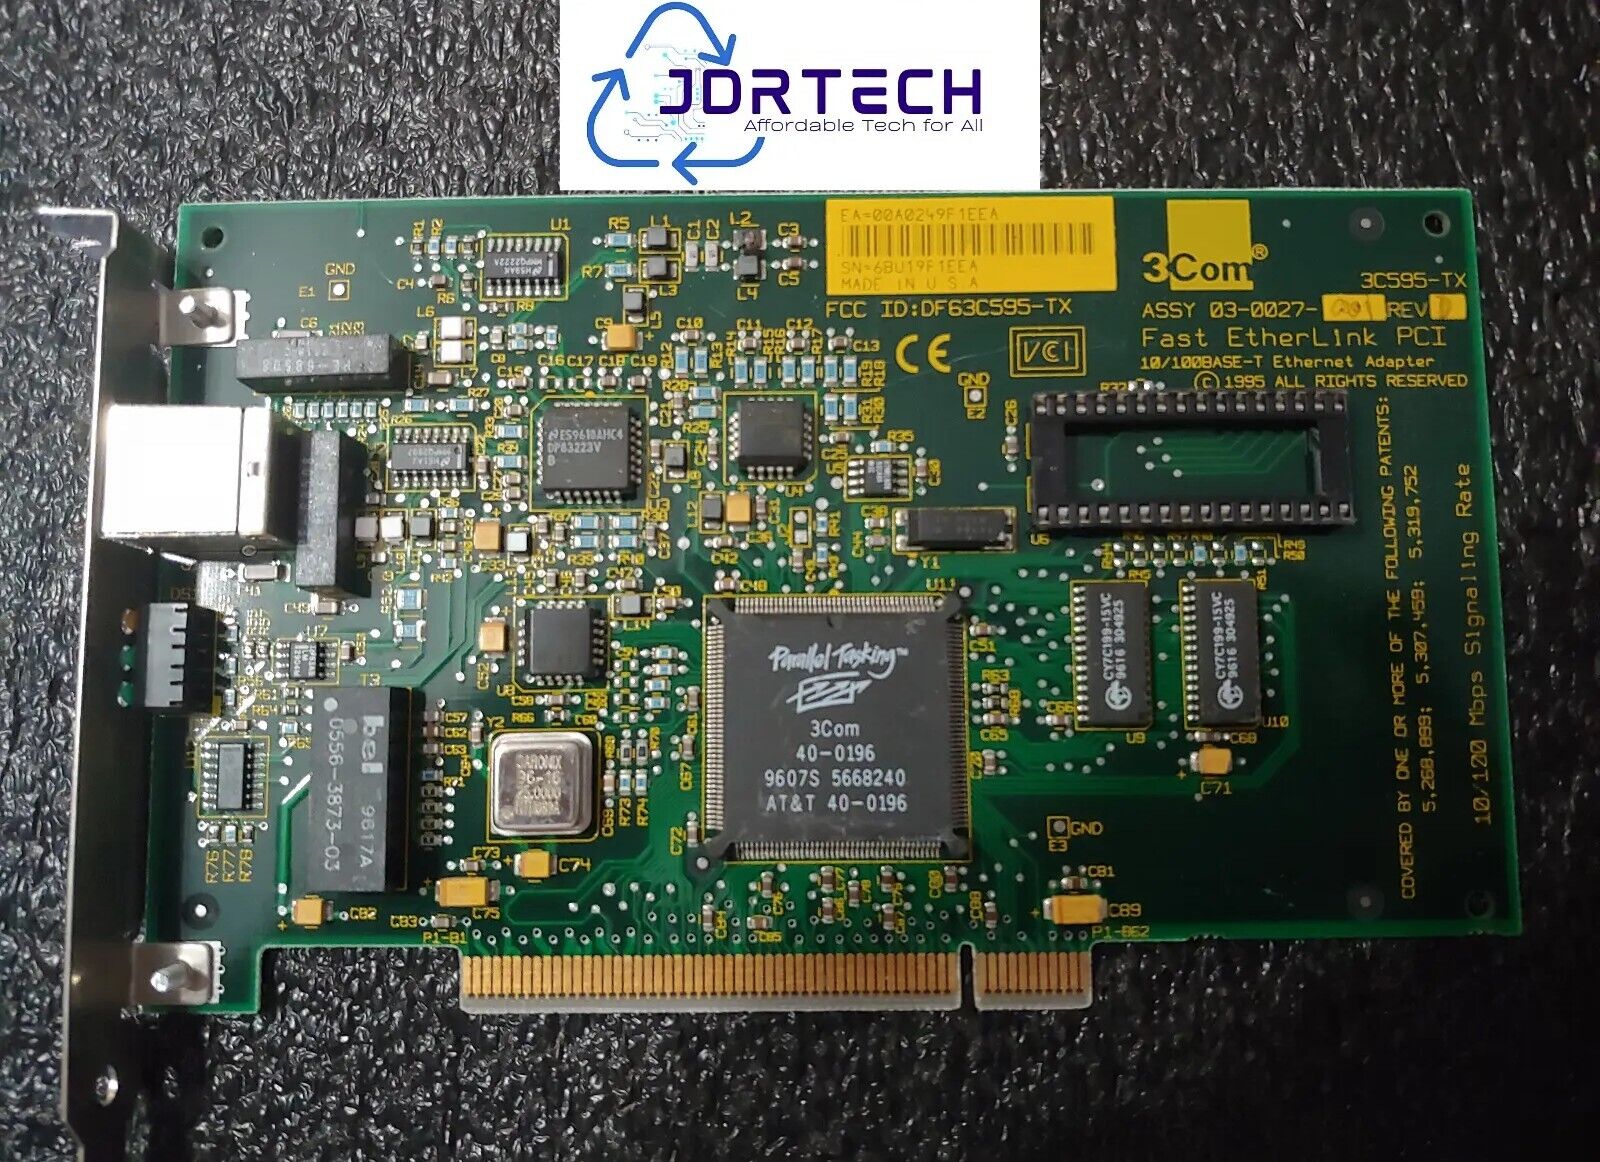 3COM 3C595-TX FAST ETHERLINK PCI 10/100BASE-T ETHERNET PCI ADAPTER